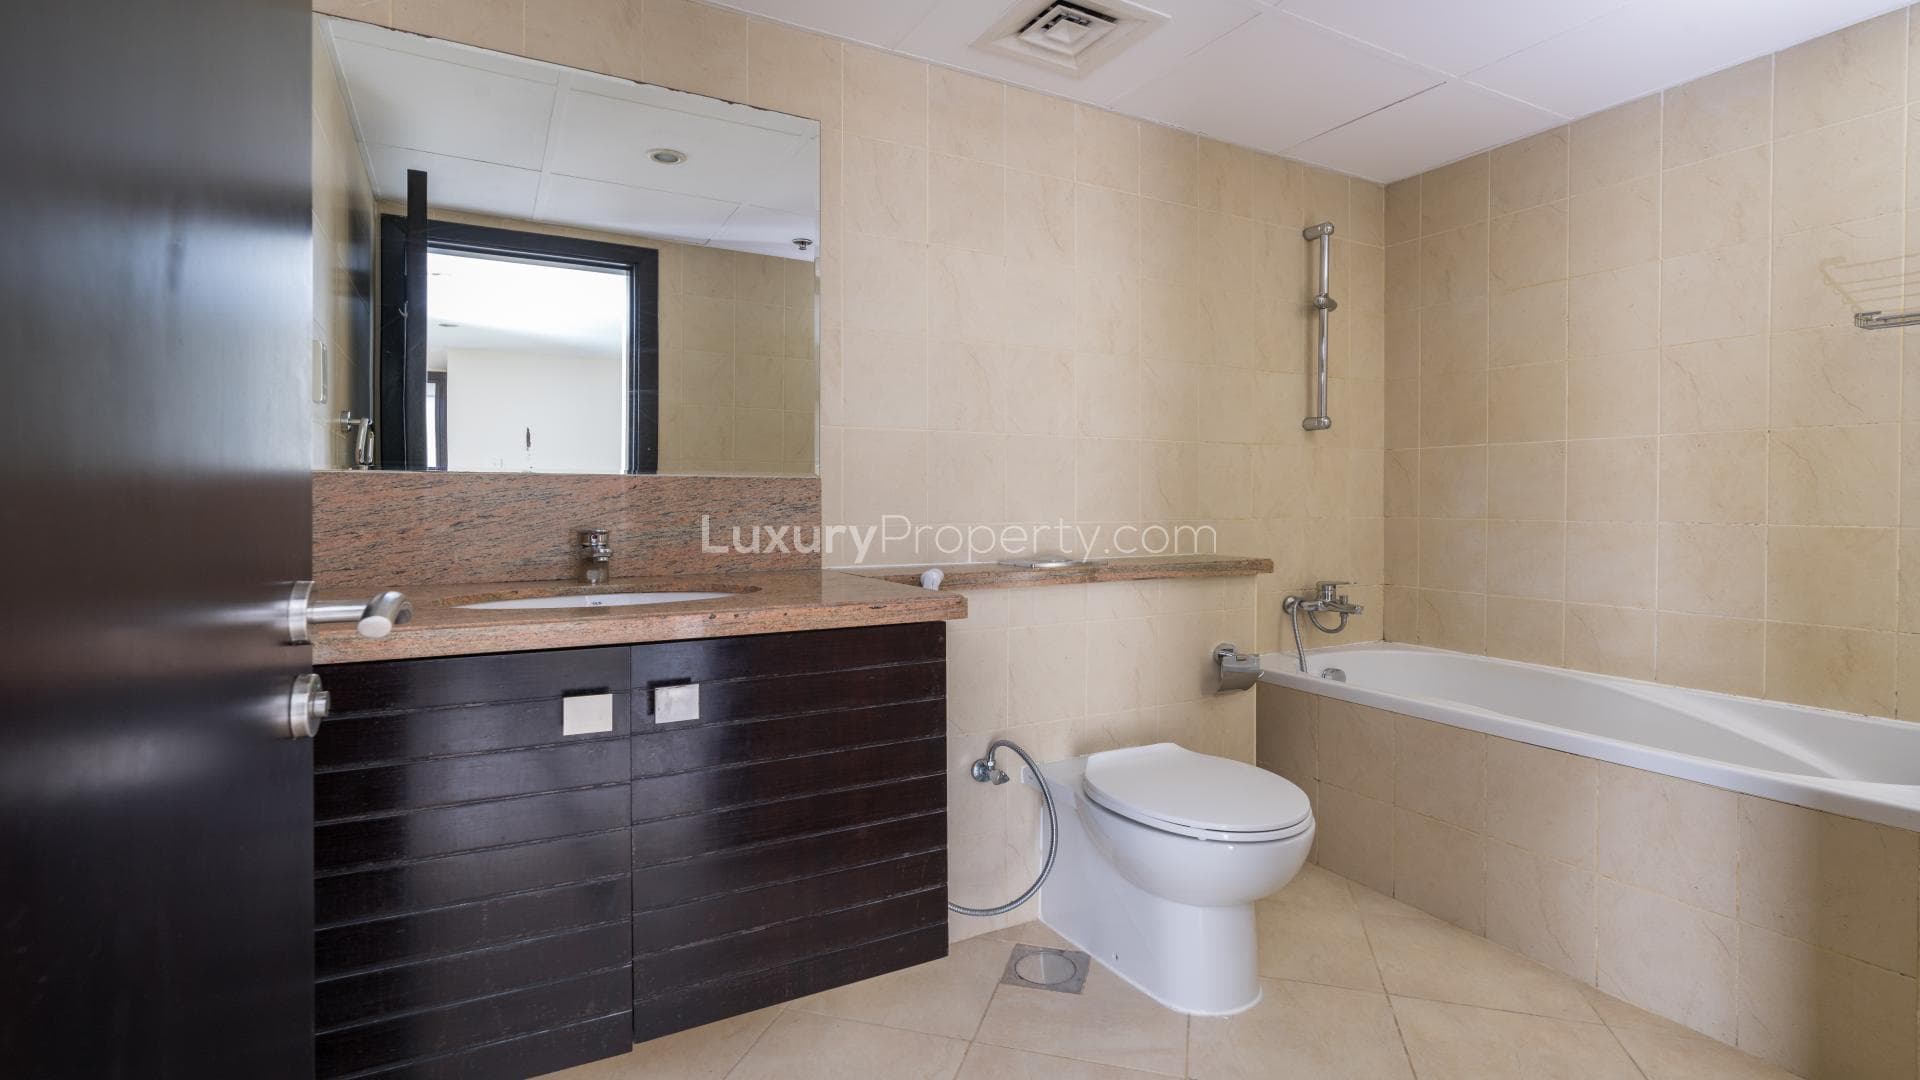 2 Bedroom Apartment For Rent Al Habtoor Tower Lp16576 13ffdc6e124fdc00.jpg